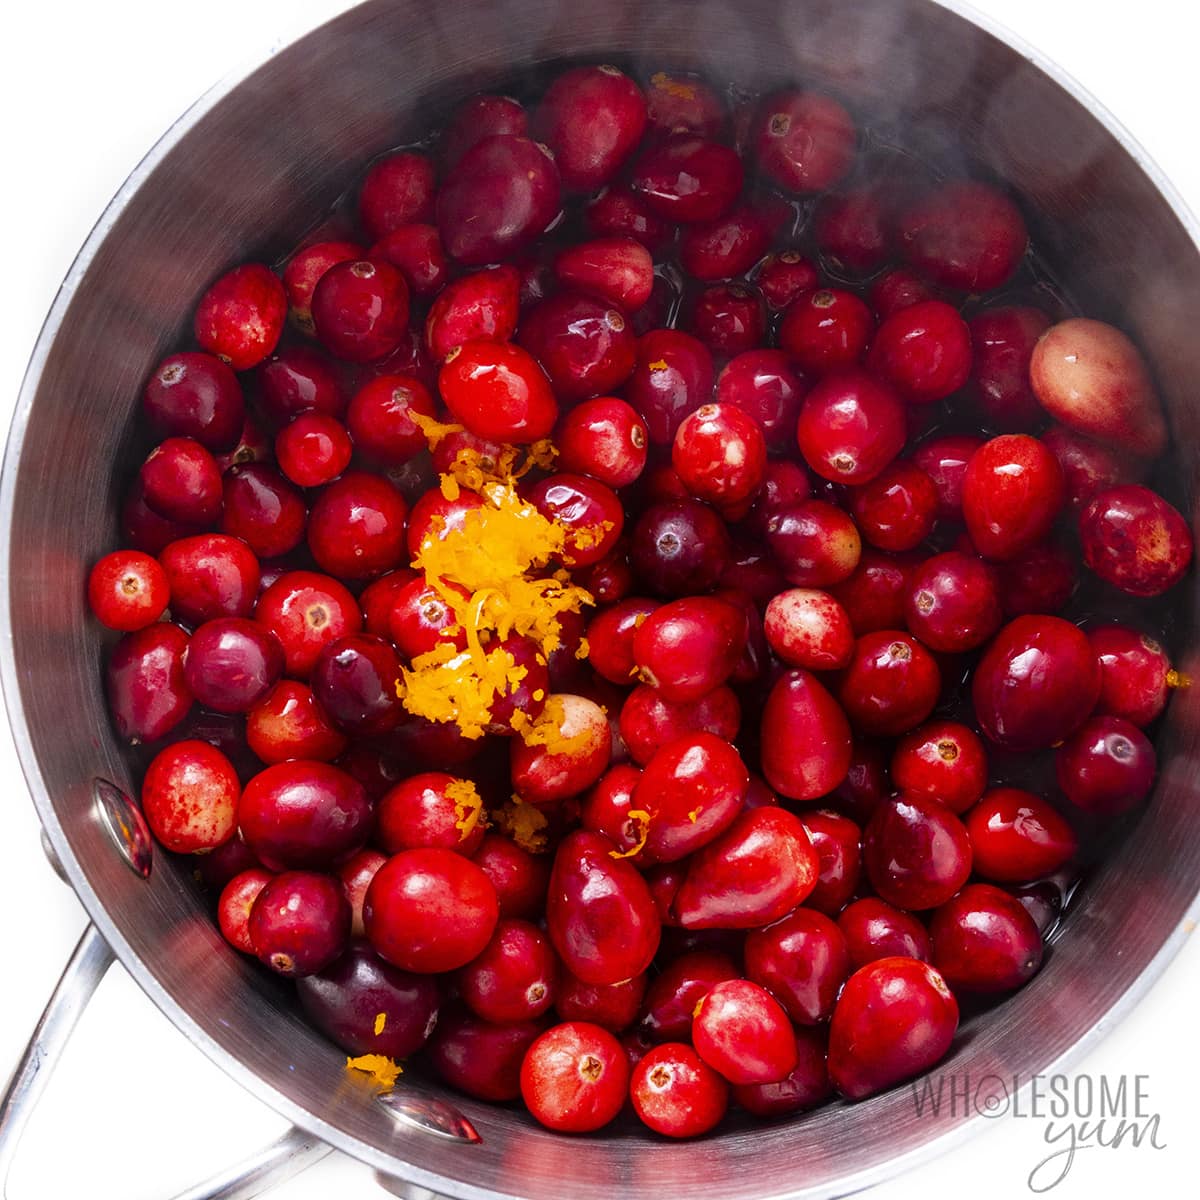 Sugar-free cranberry sauce ingredients in a saucepan.